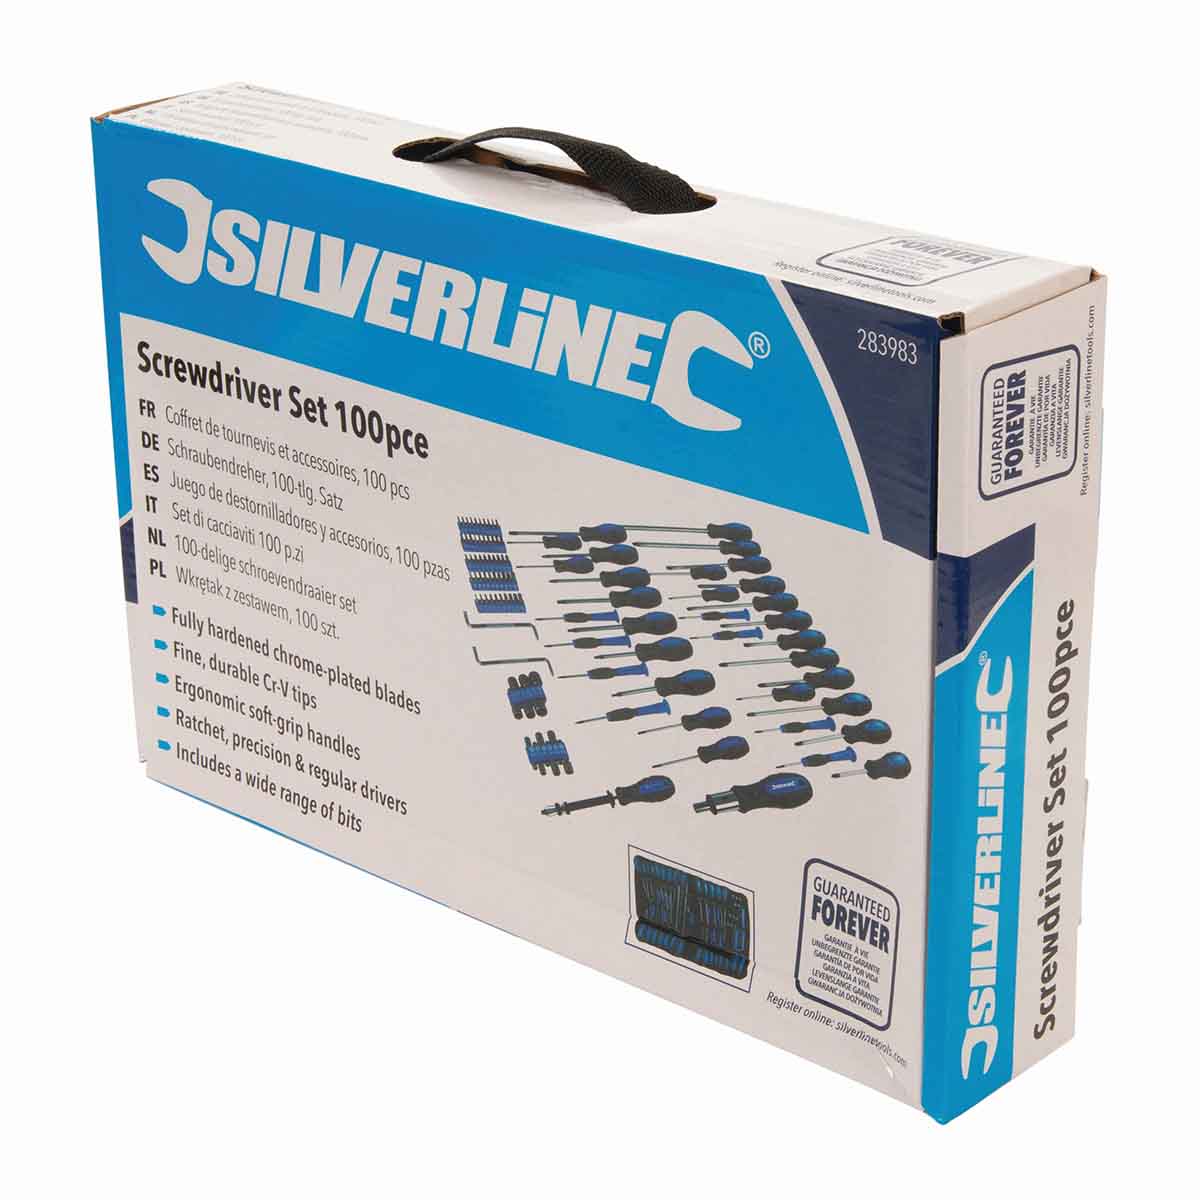 Silverline 283983 Screwdriver Set 100pce 1